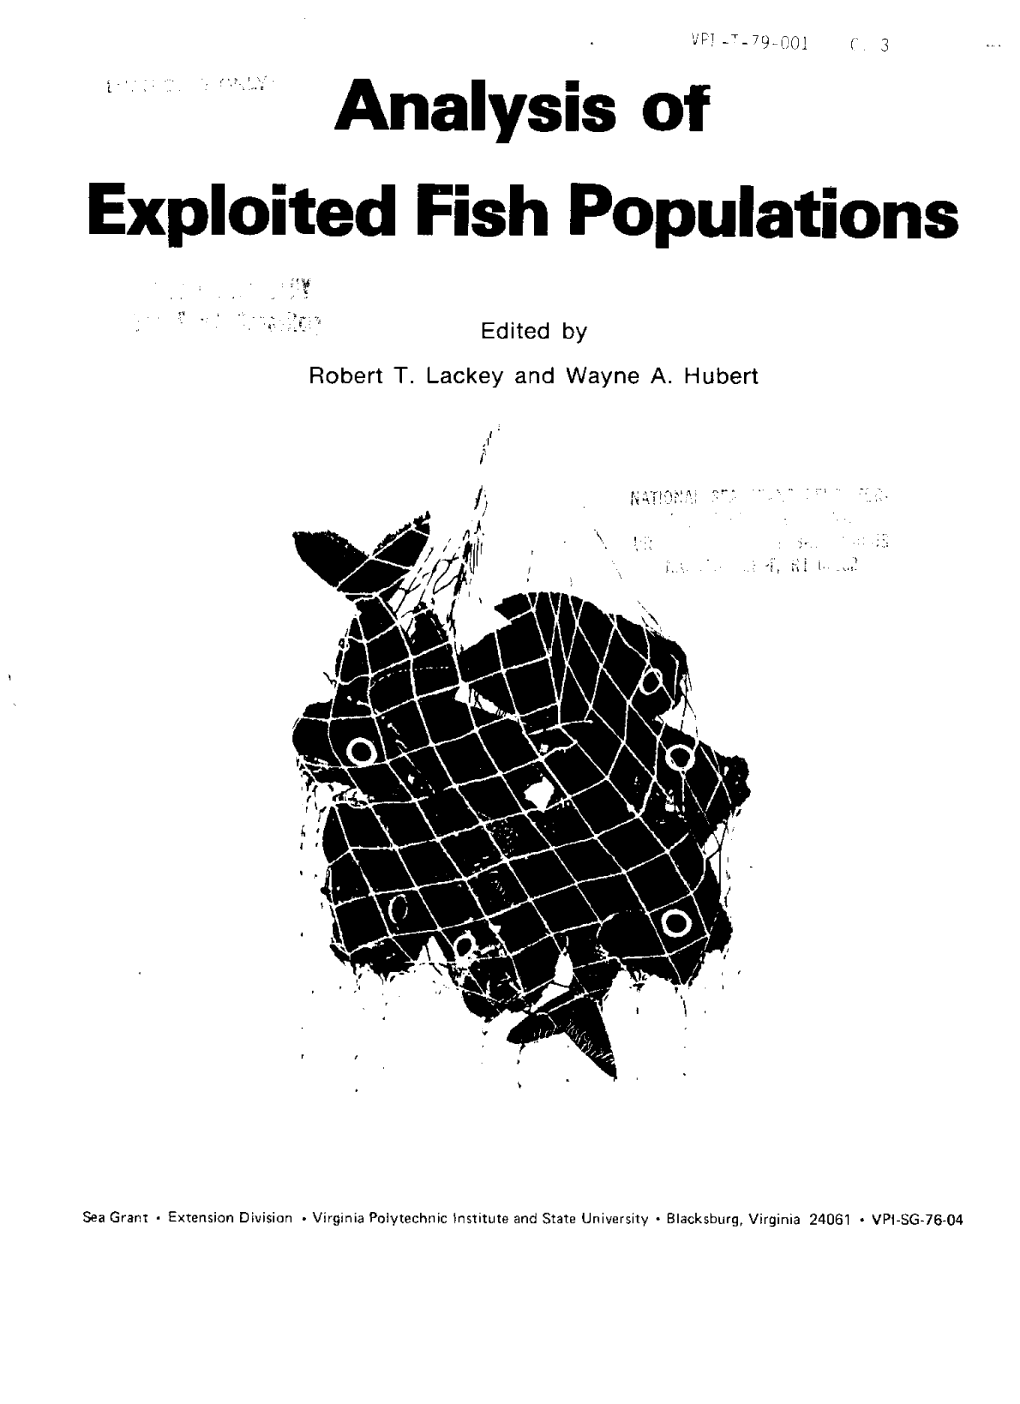 Exploited Fish Populations